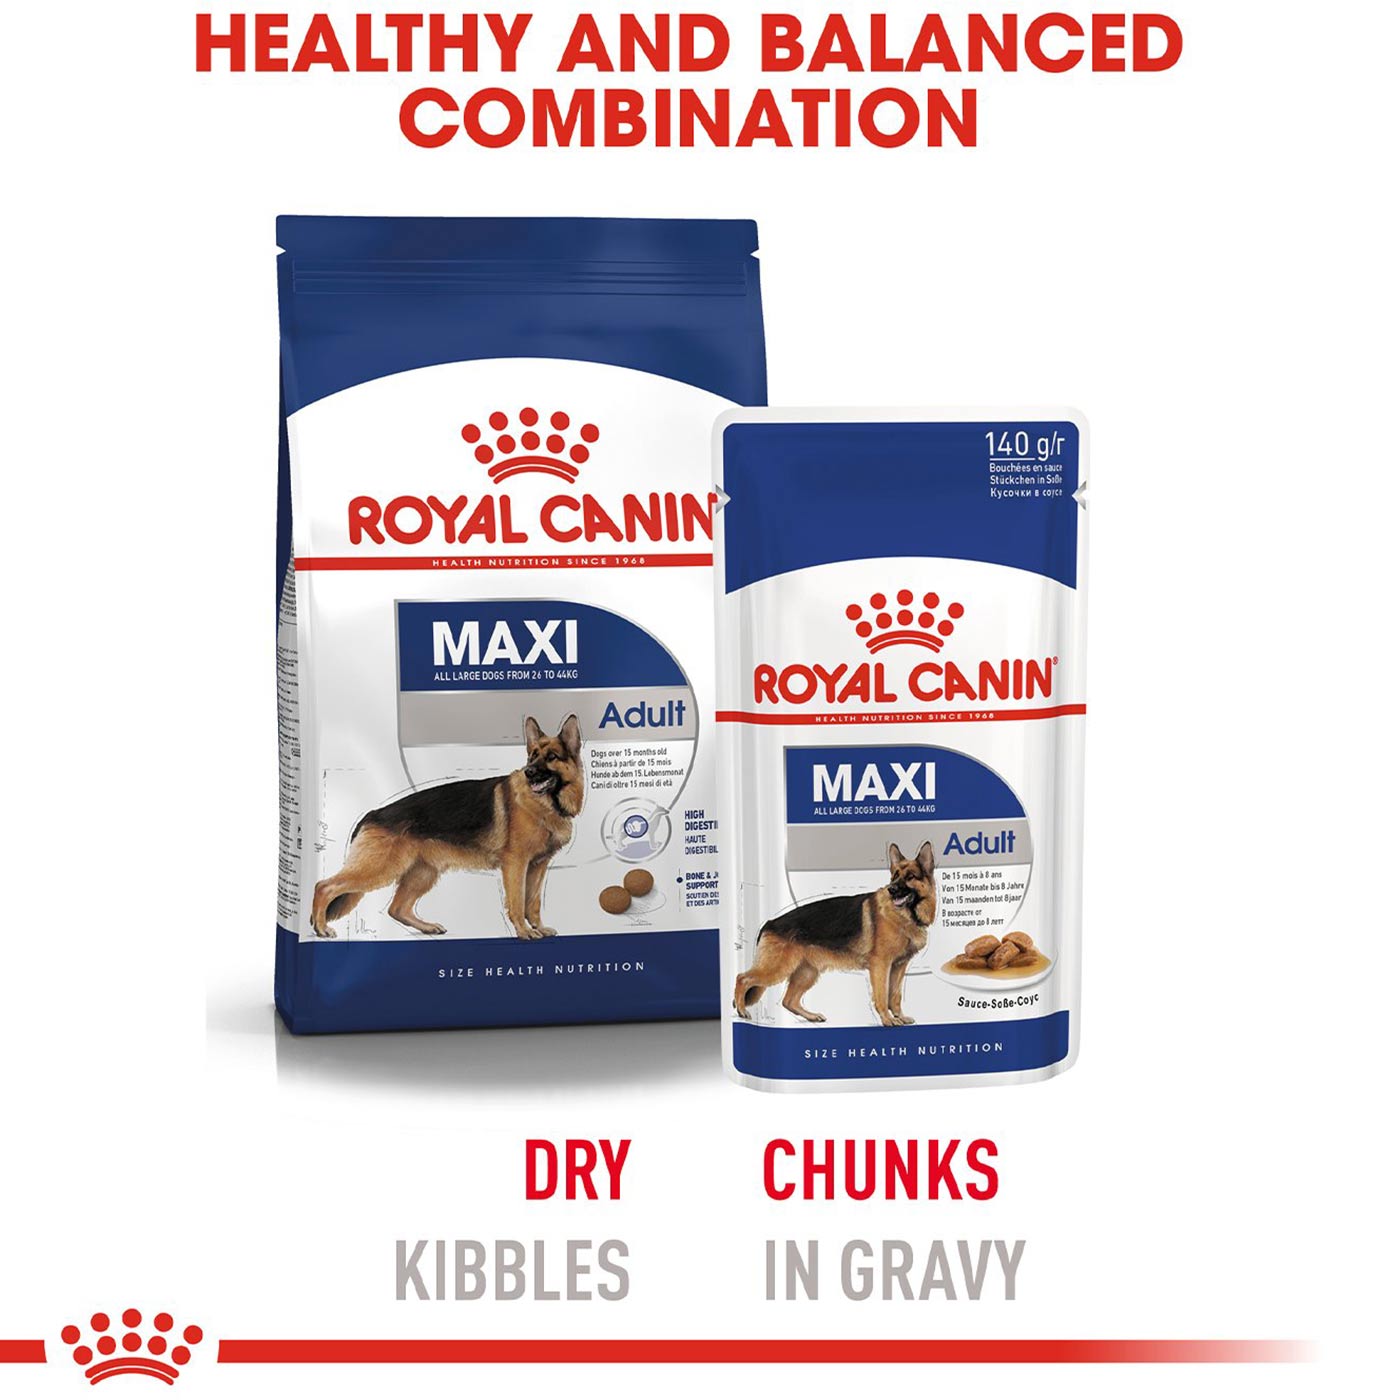 Royal Canin Adult Maxi Breed Wet Dog Food